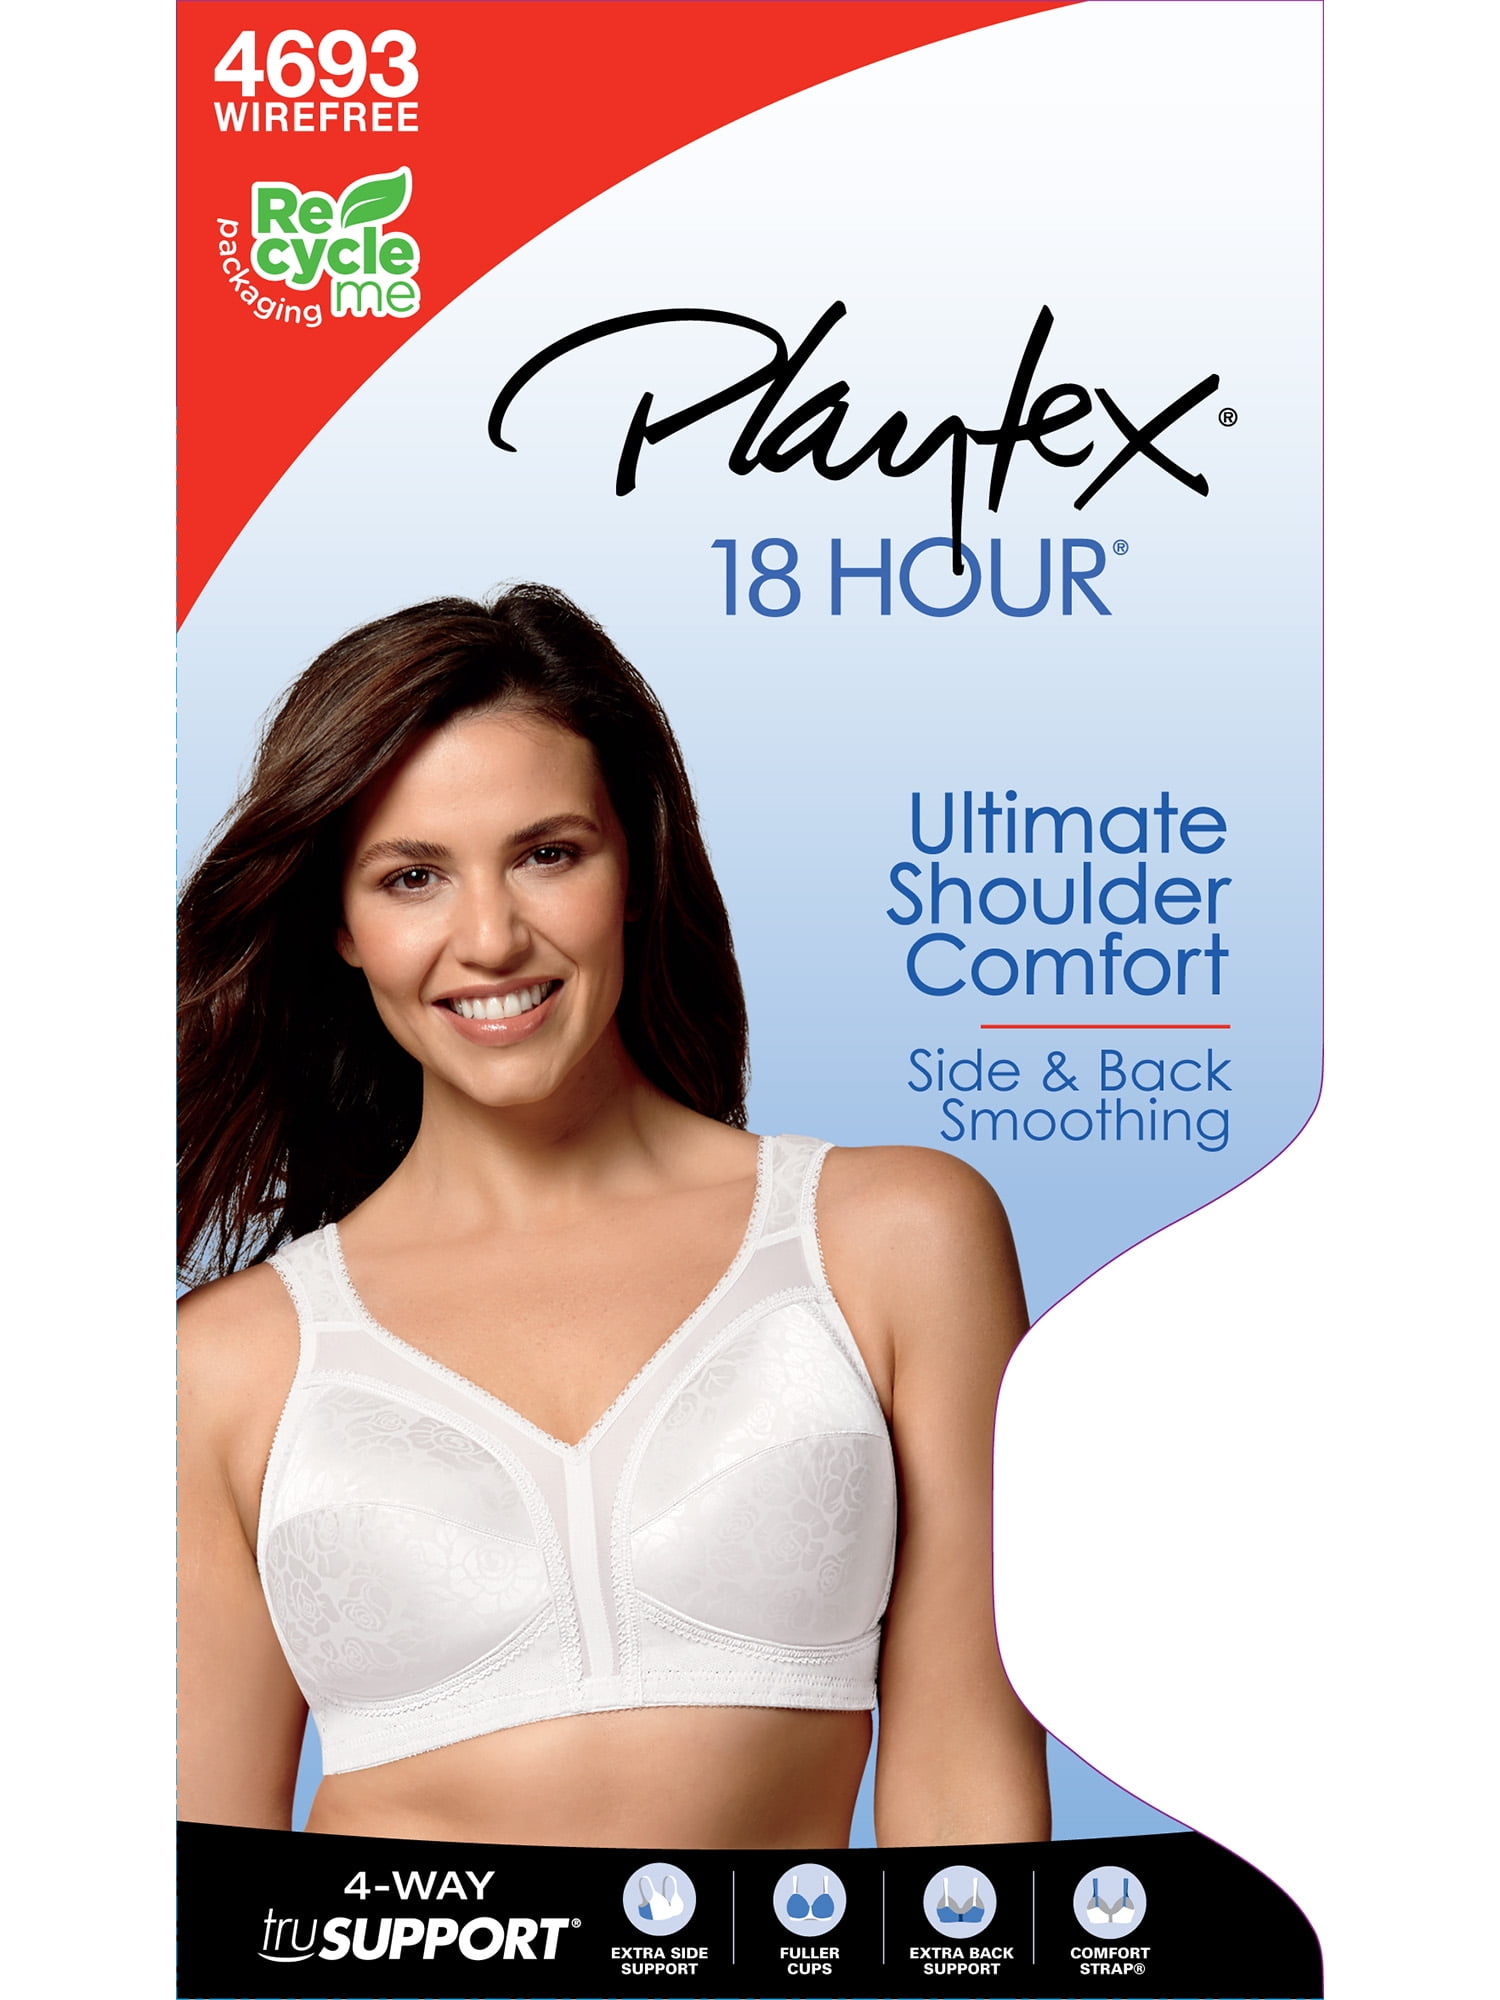 Playtex 18 Hour Ultimate Shoulder Comfort Wireless Bra Natural